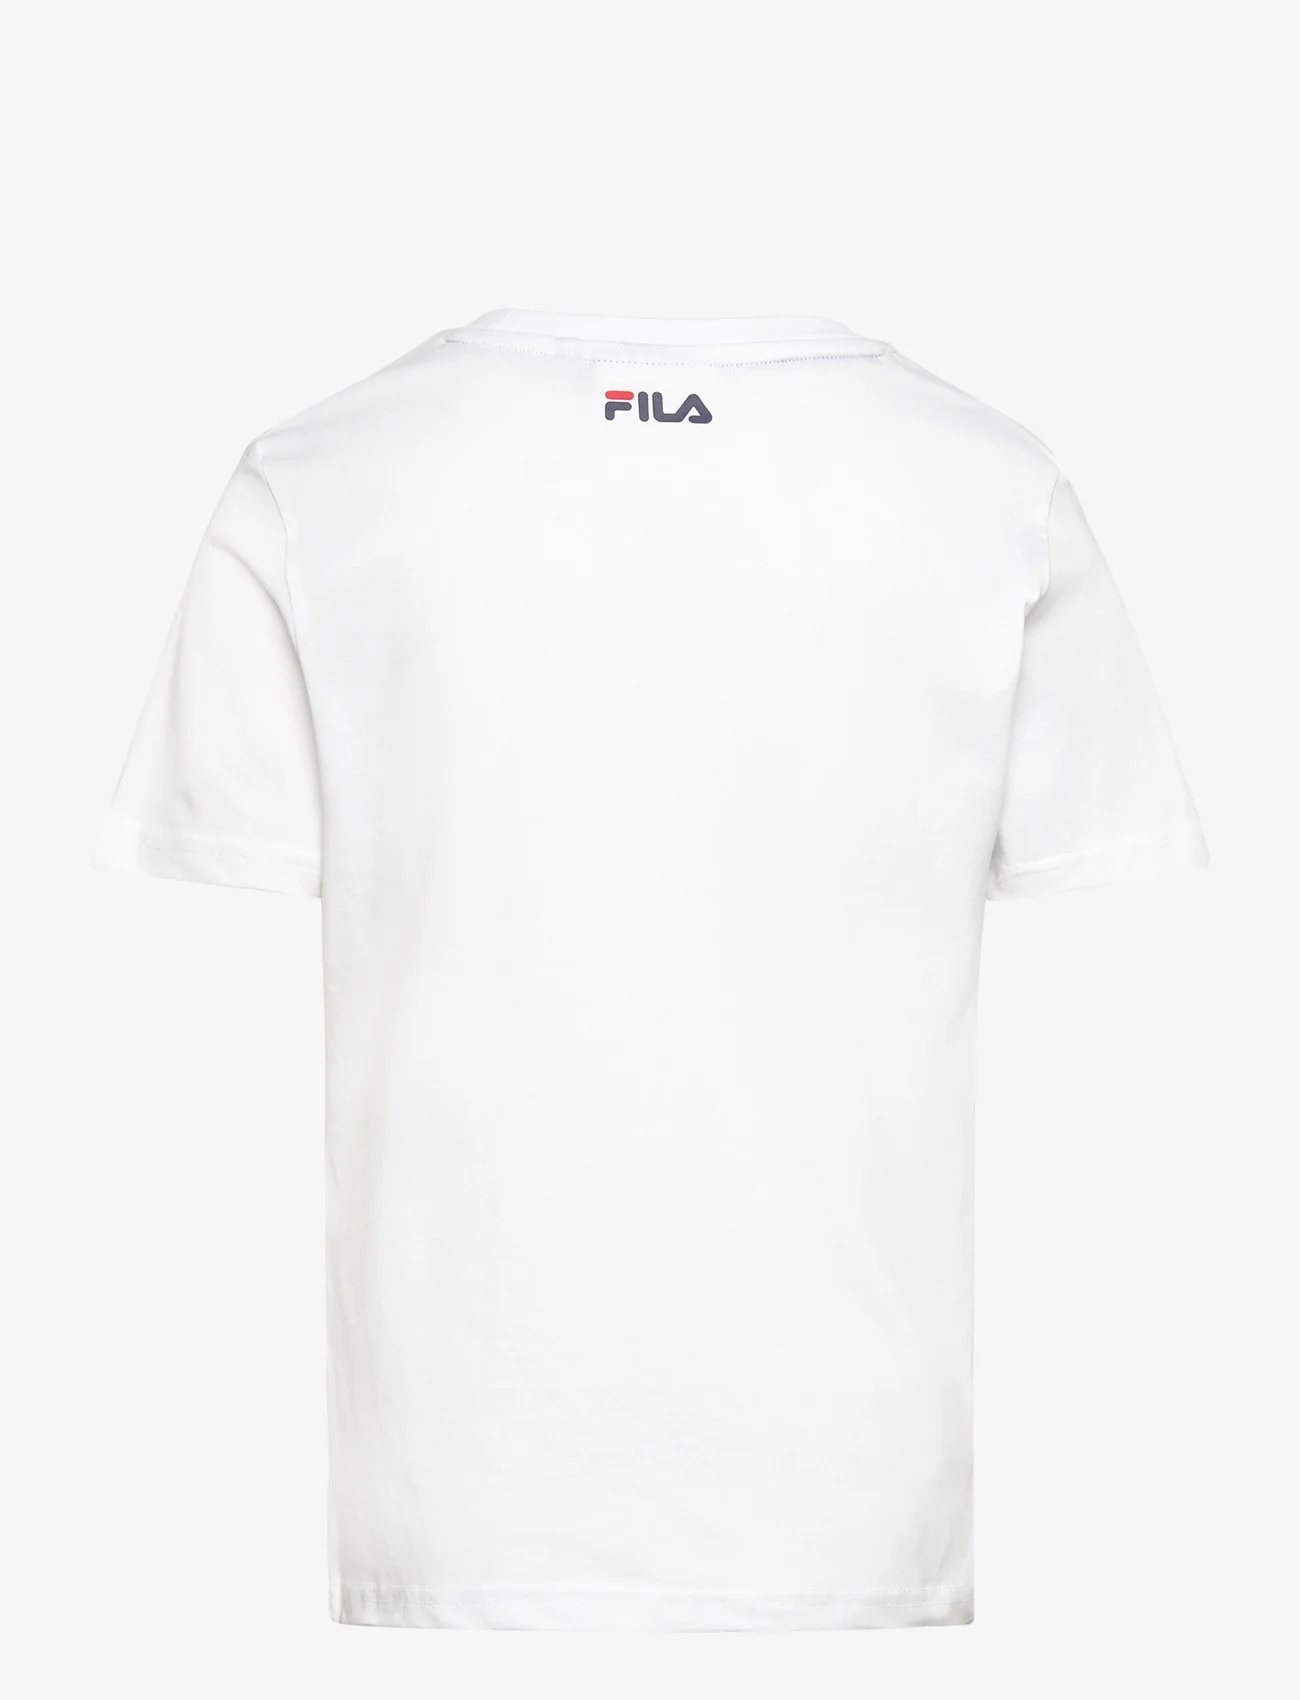 FILA - BAIA MARE classic logo tee - lühikeste varrukatega t-särgid - bright white - 1